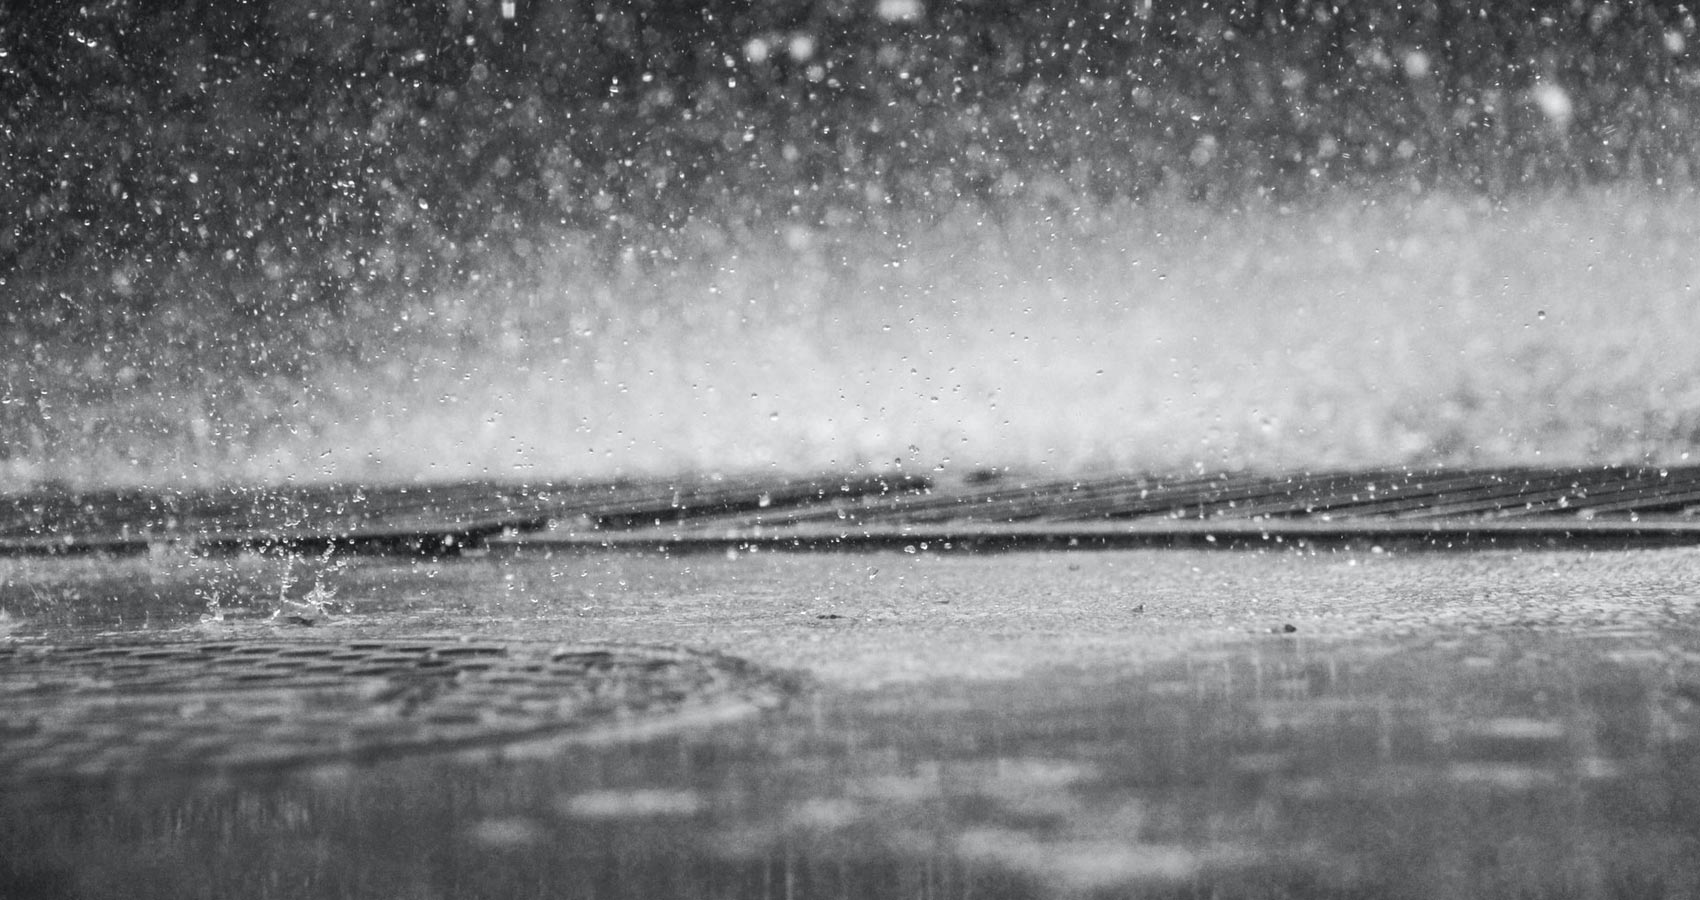 Rain, a poem by John Anthony Fingleton at Spillwords.com